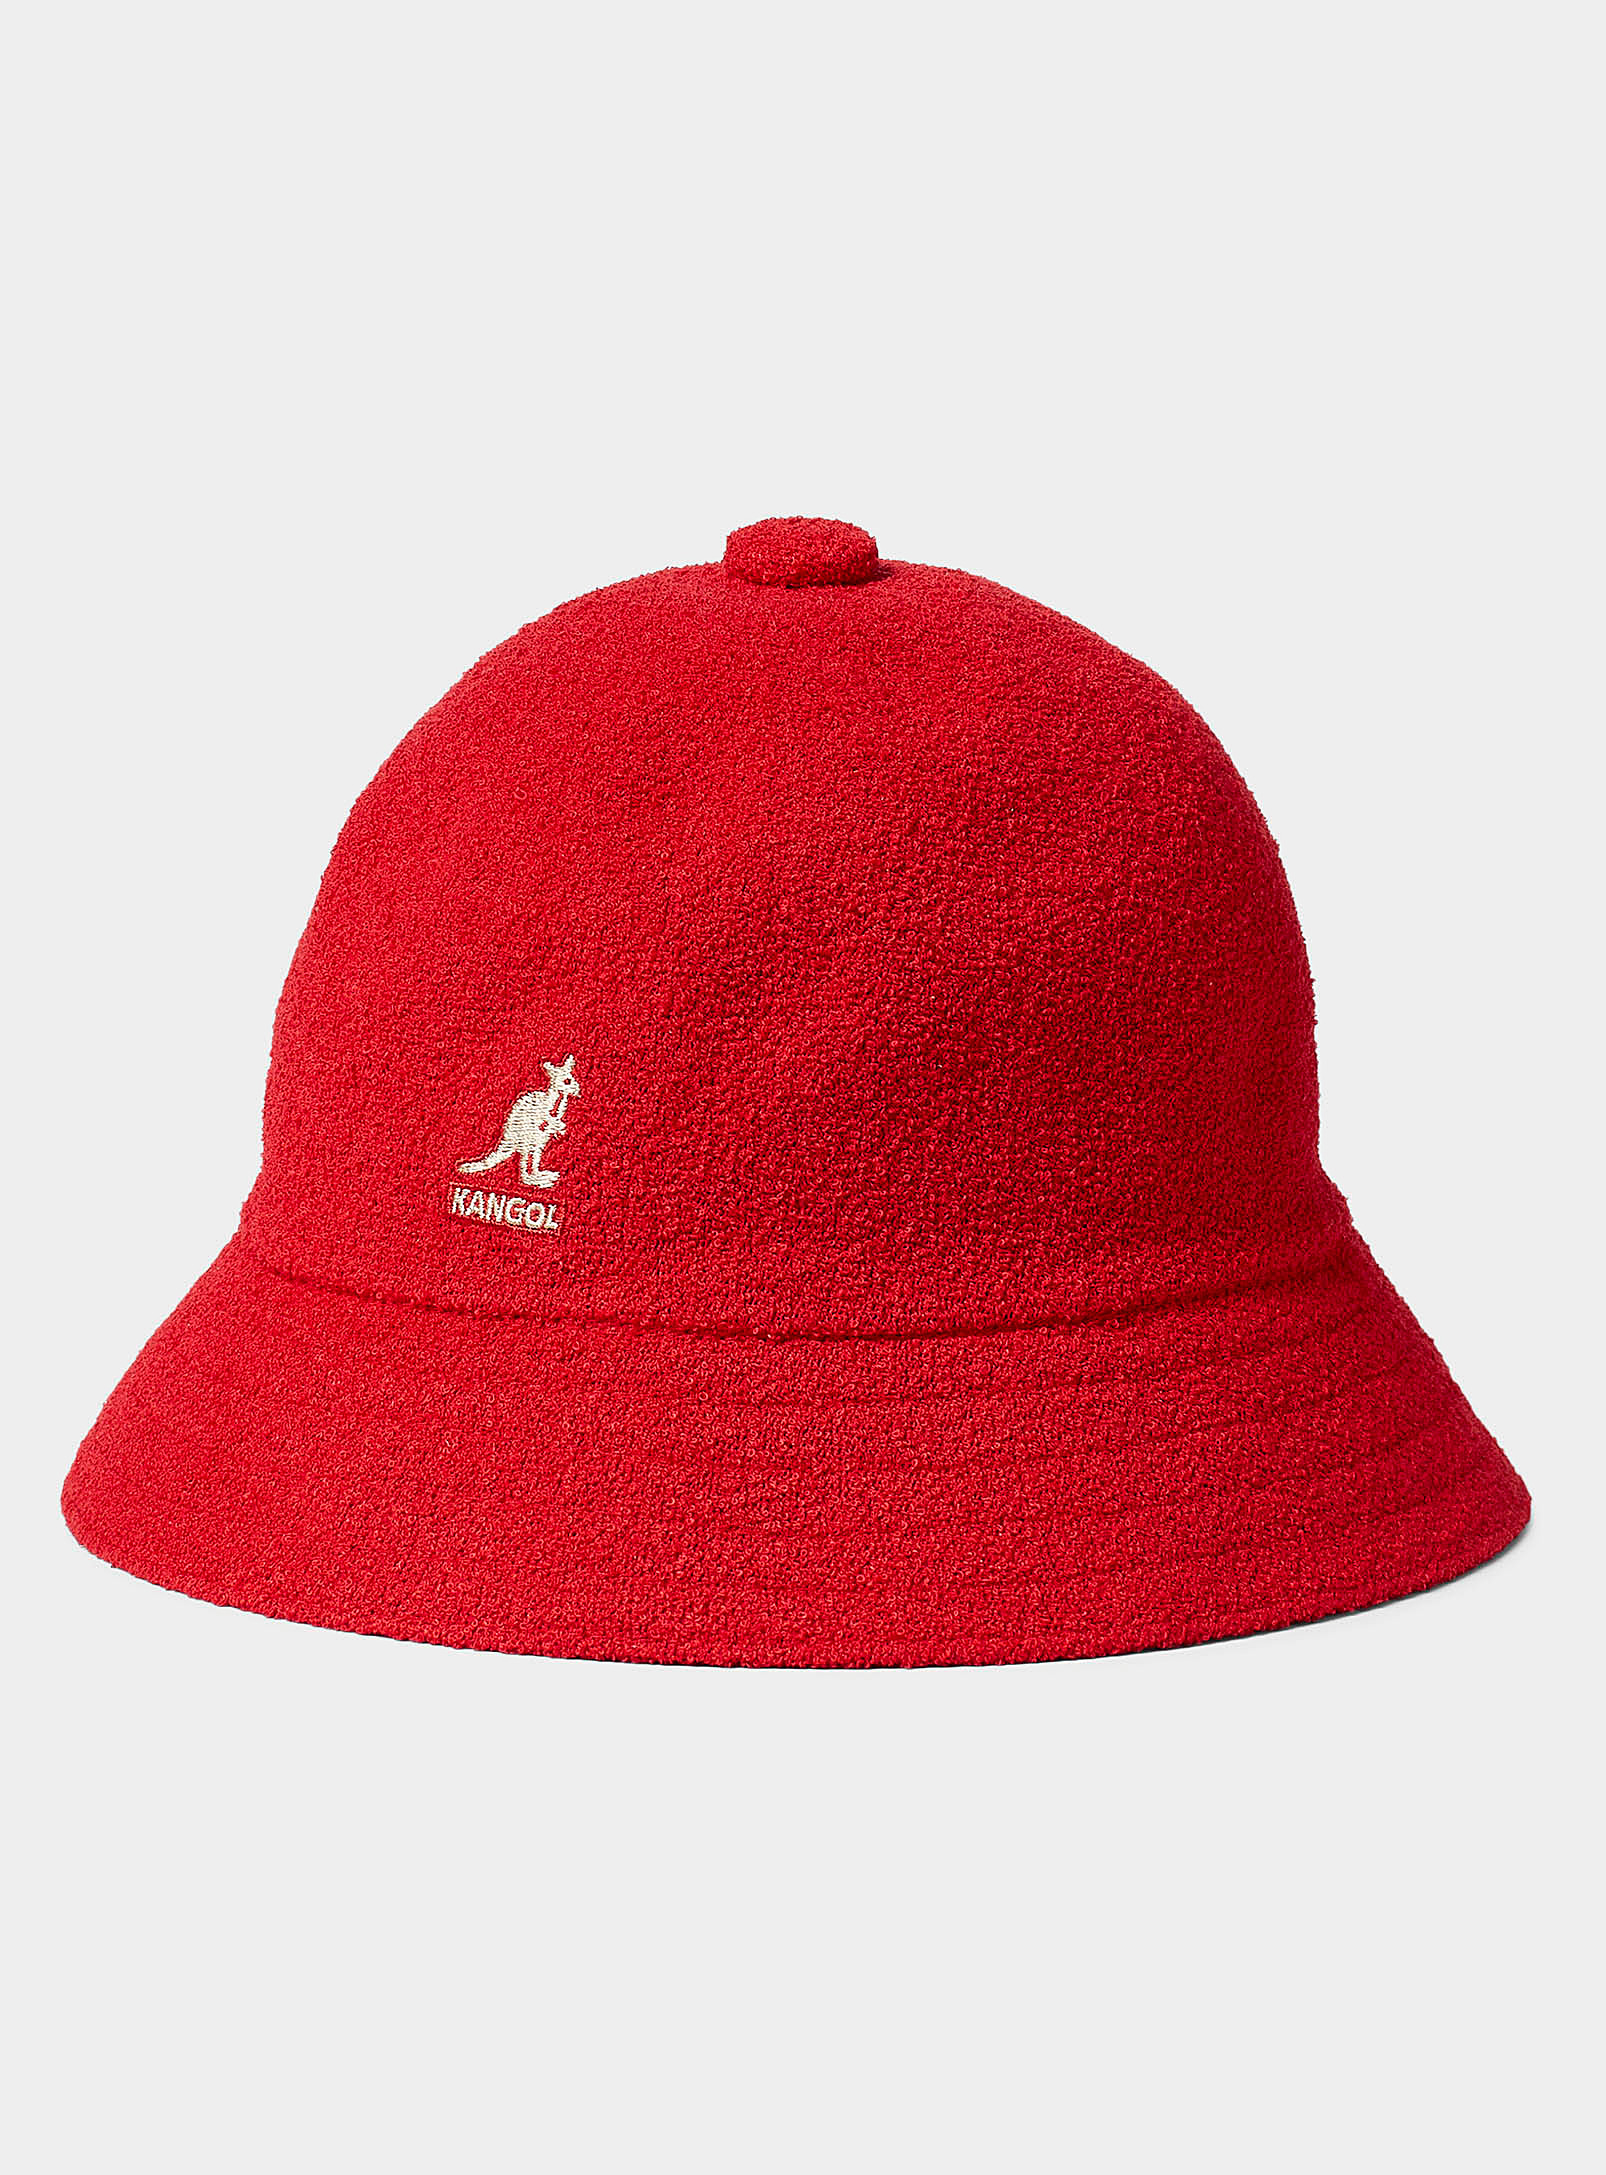 Kangol Bermuda Casual Bucket Hat In Red